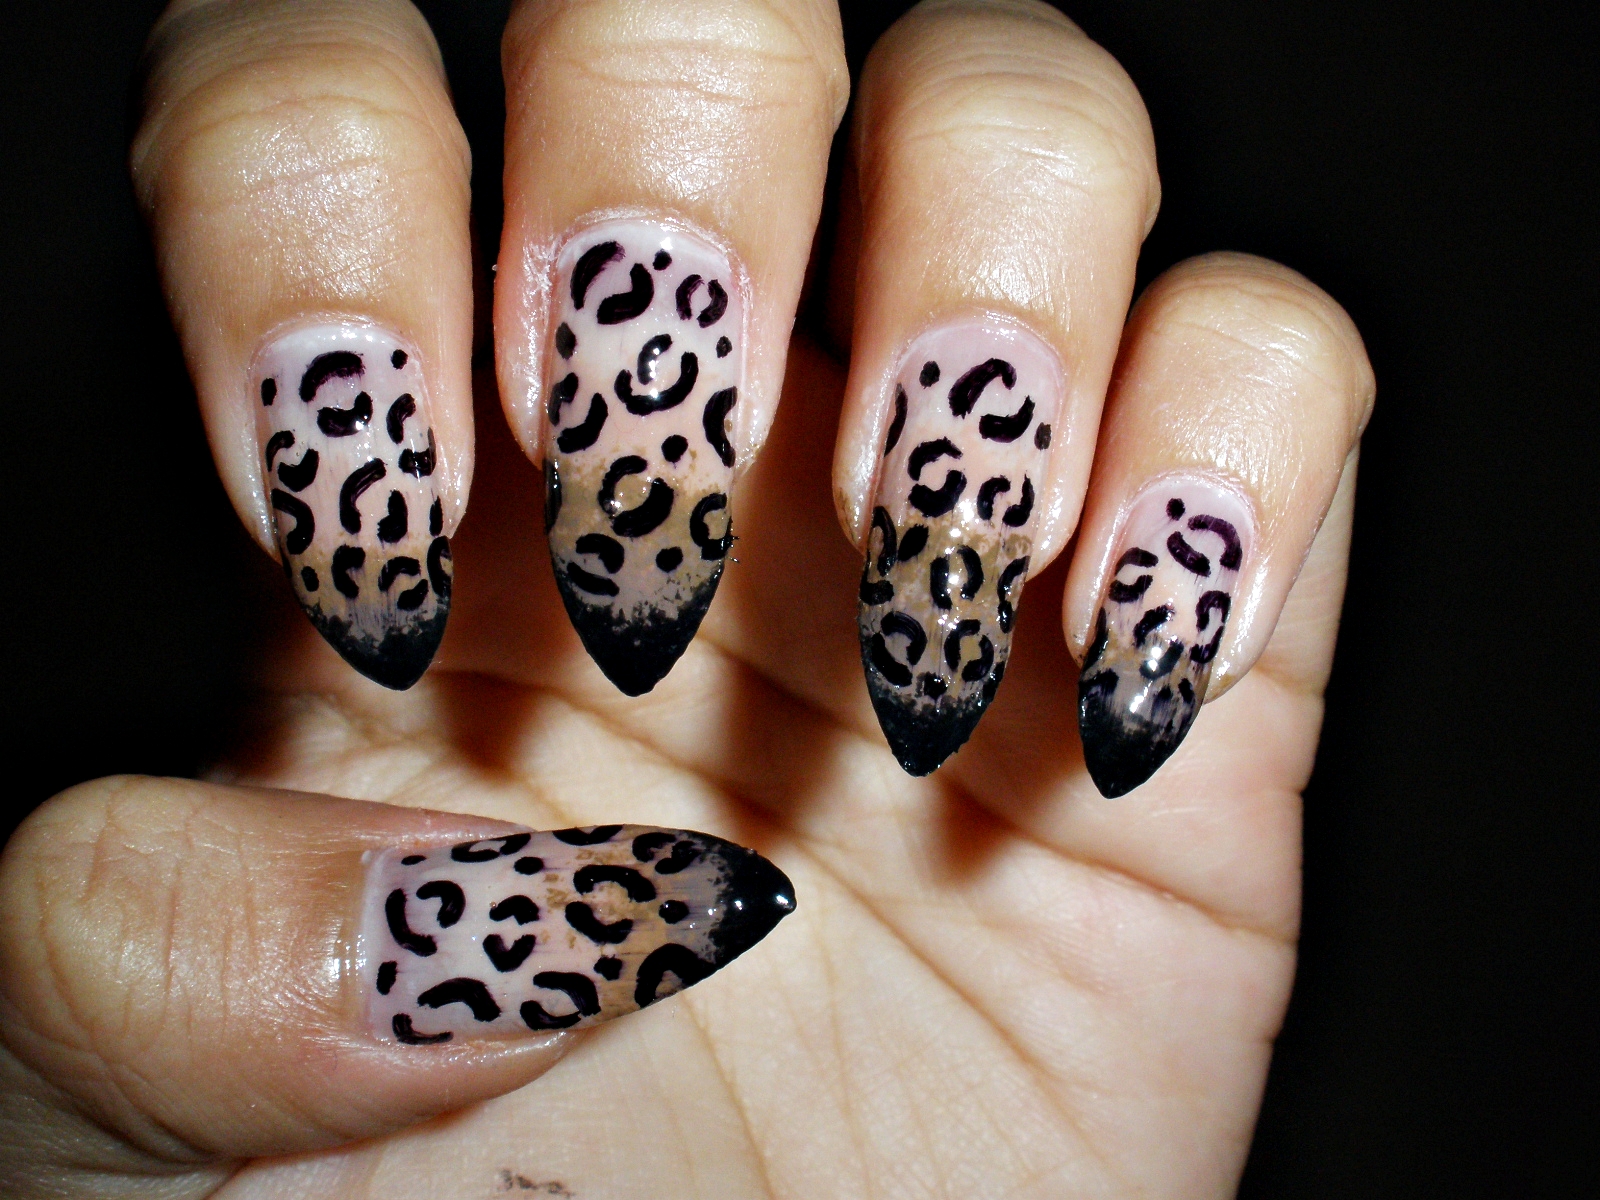 1. Cheetah Print Nail Design Picture Ideas - wide 2